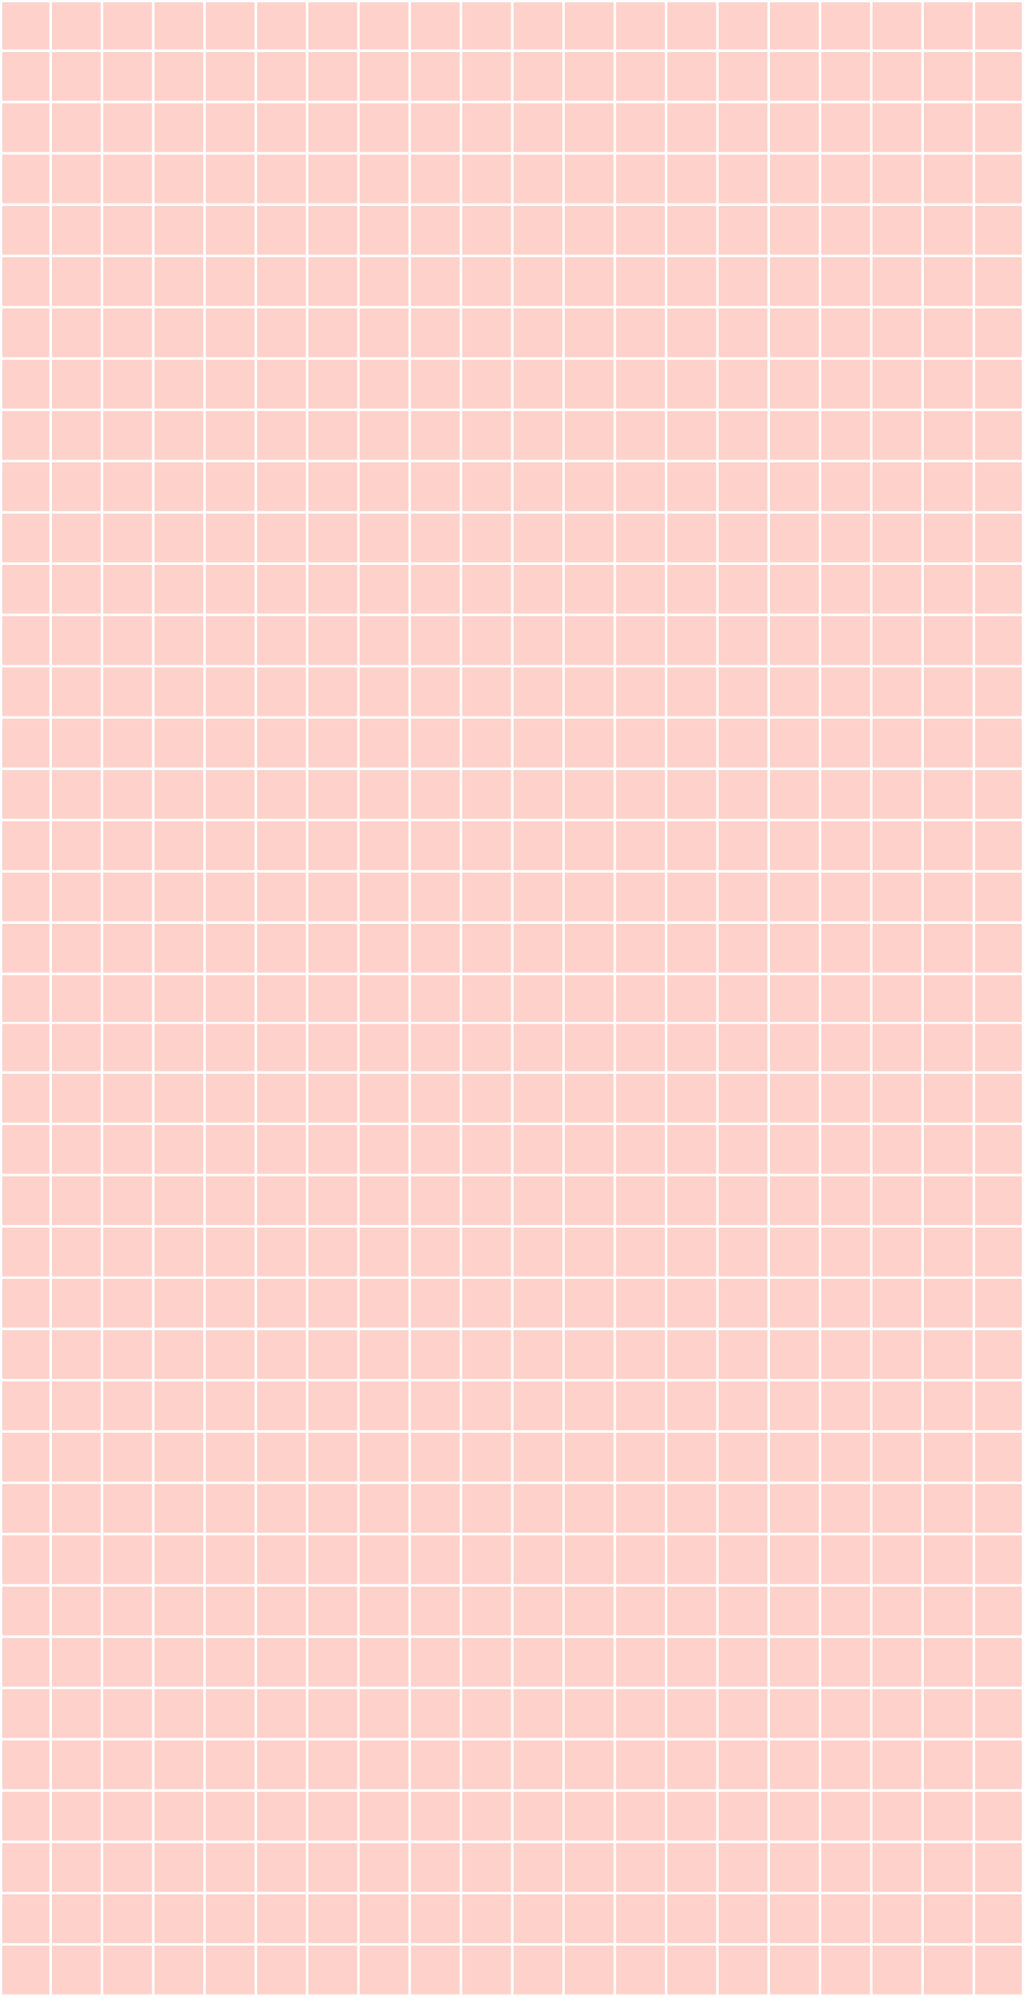 grid background red by pon-ponn on DeviantArt